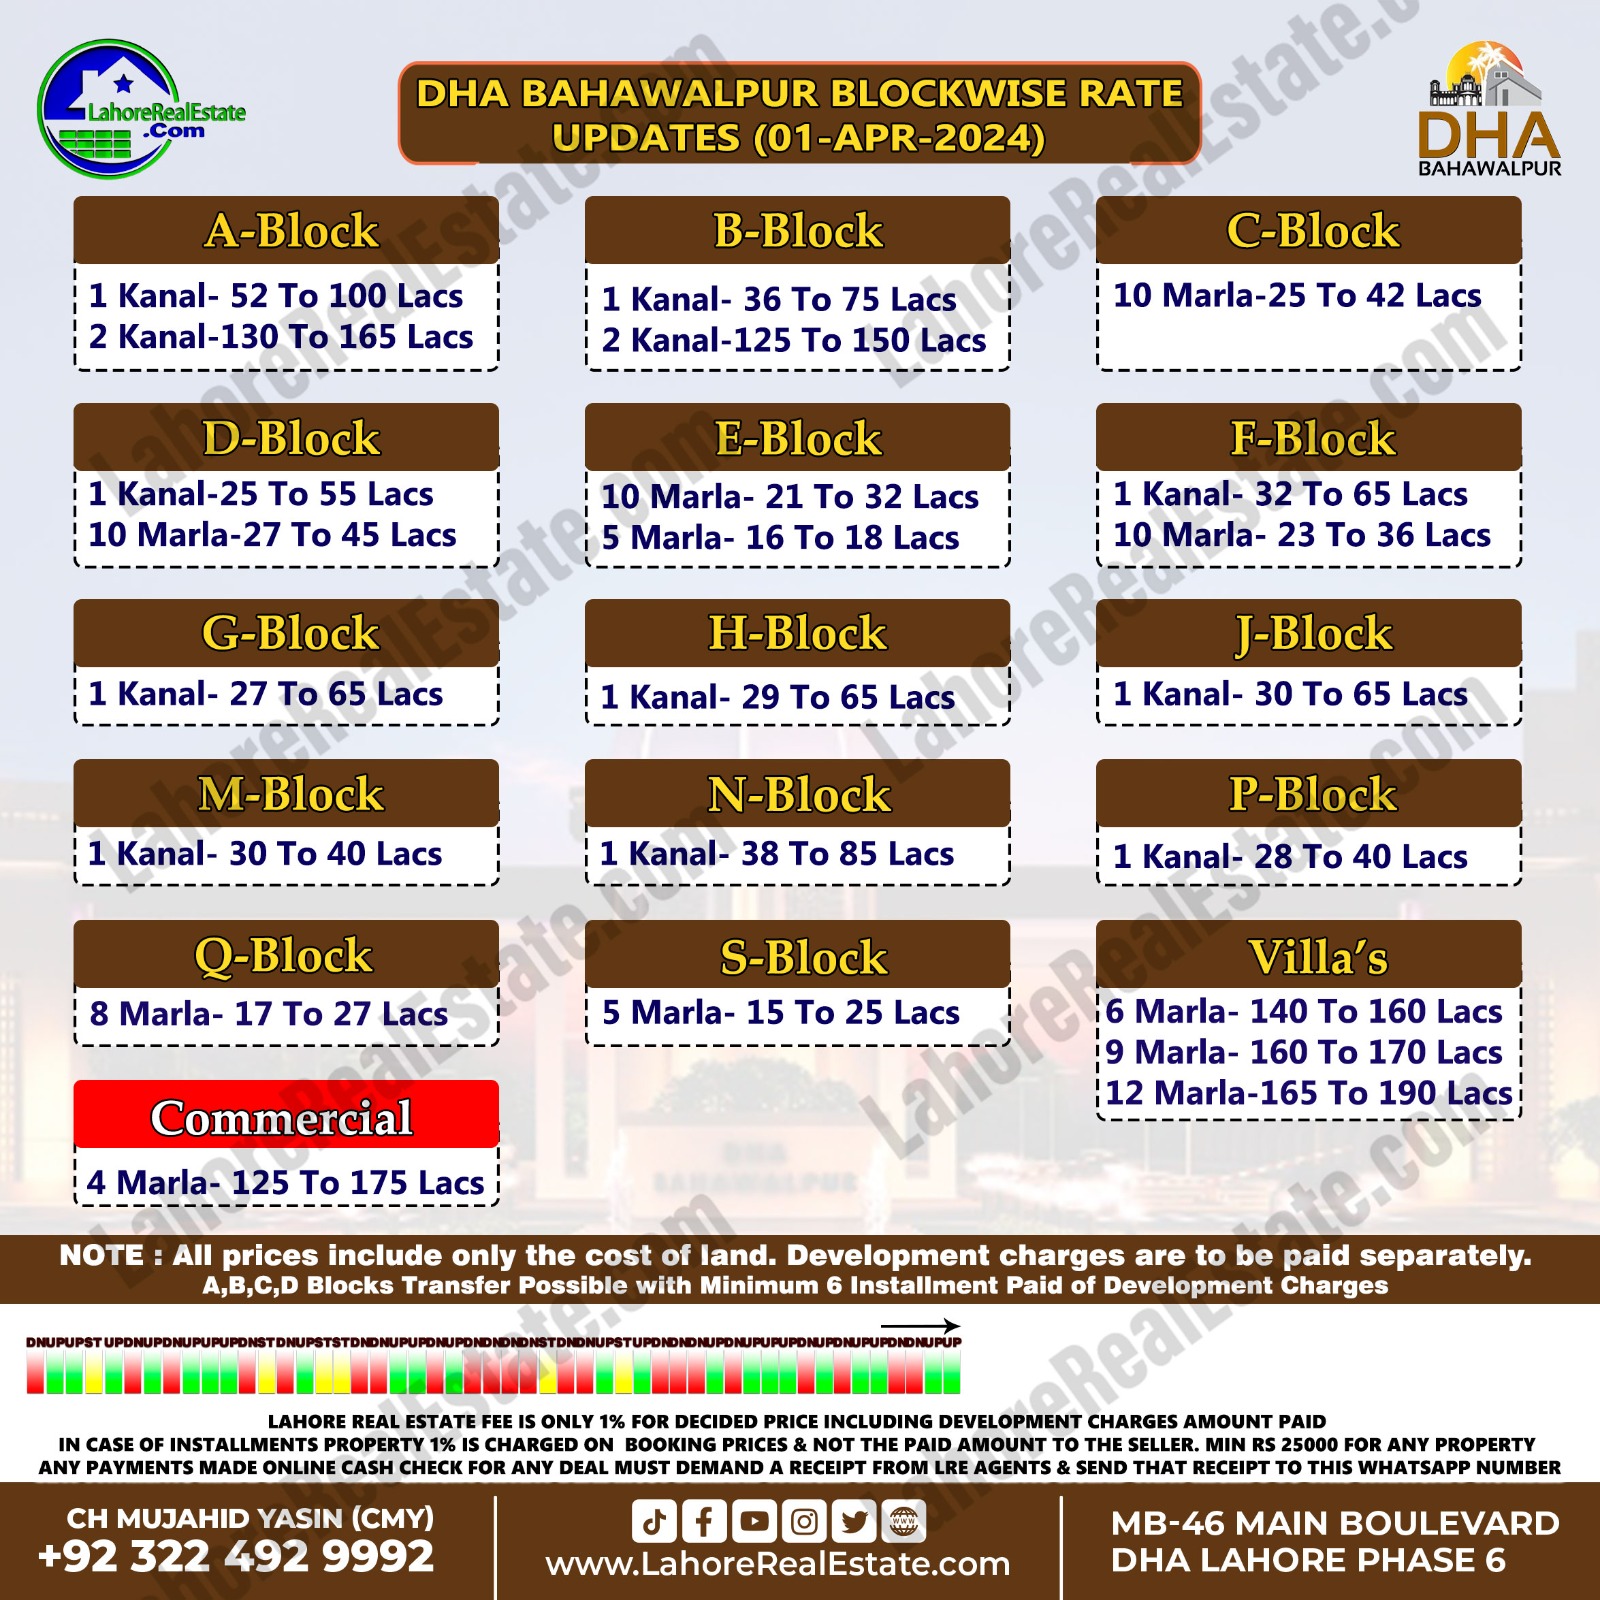 DHA Bahawalpur Plot Prices Update April 02, 2024